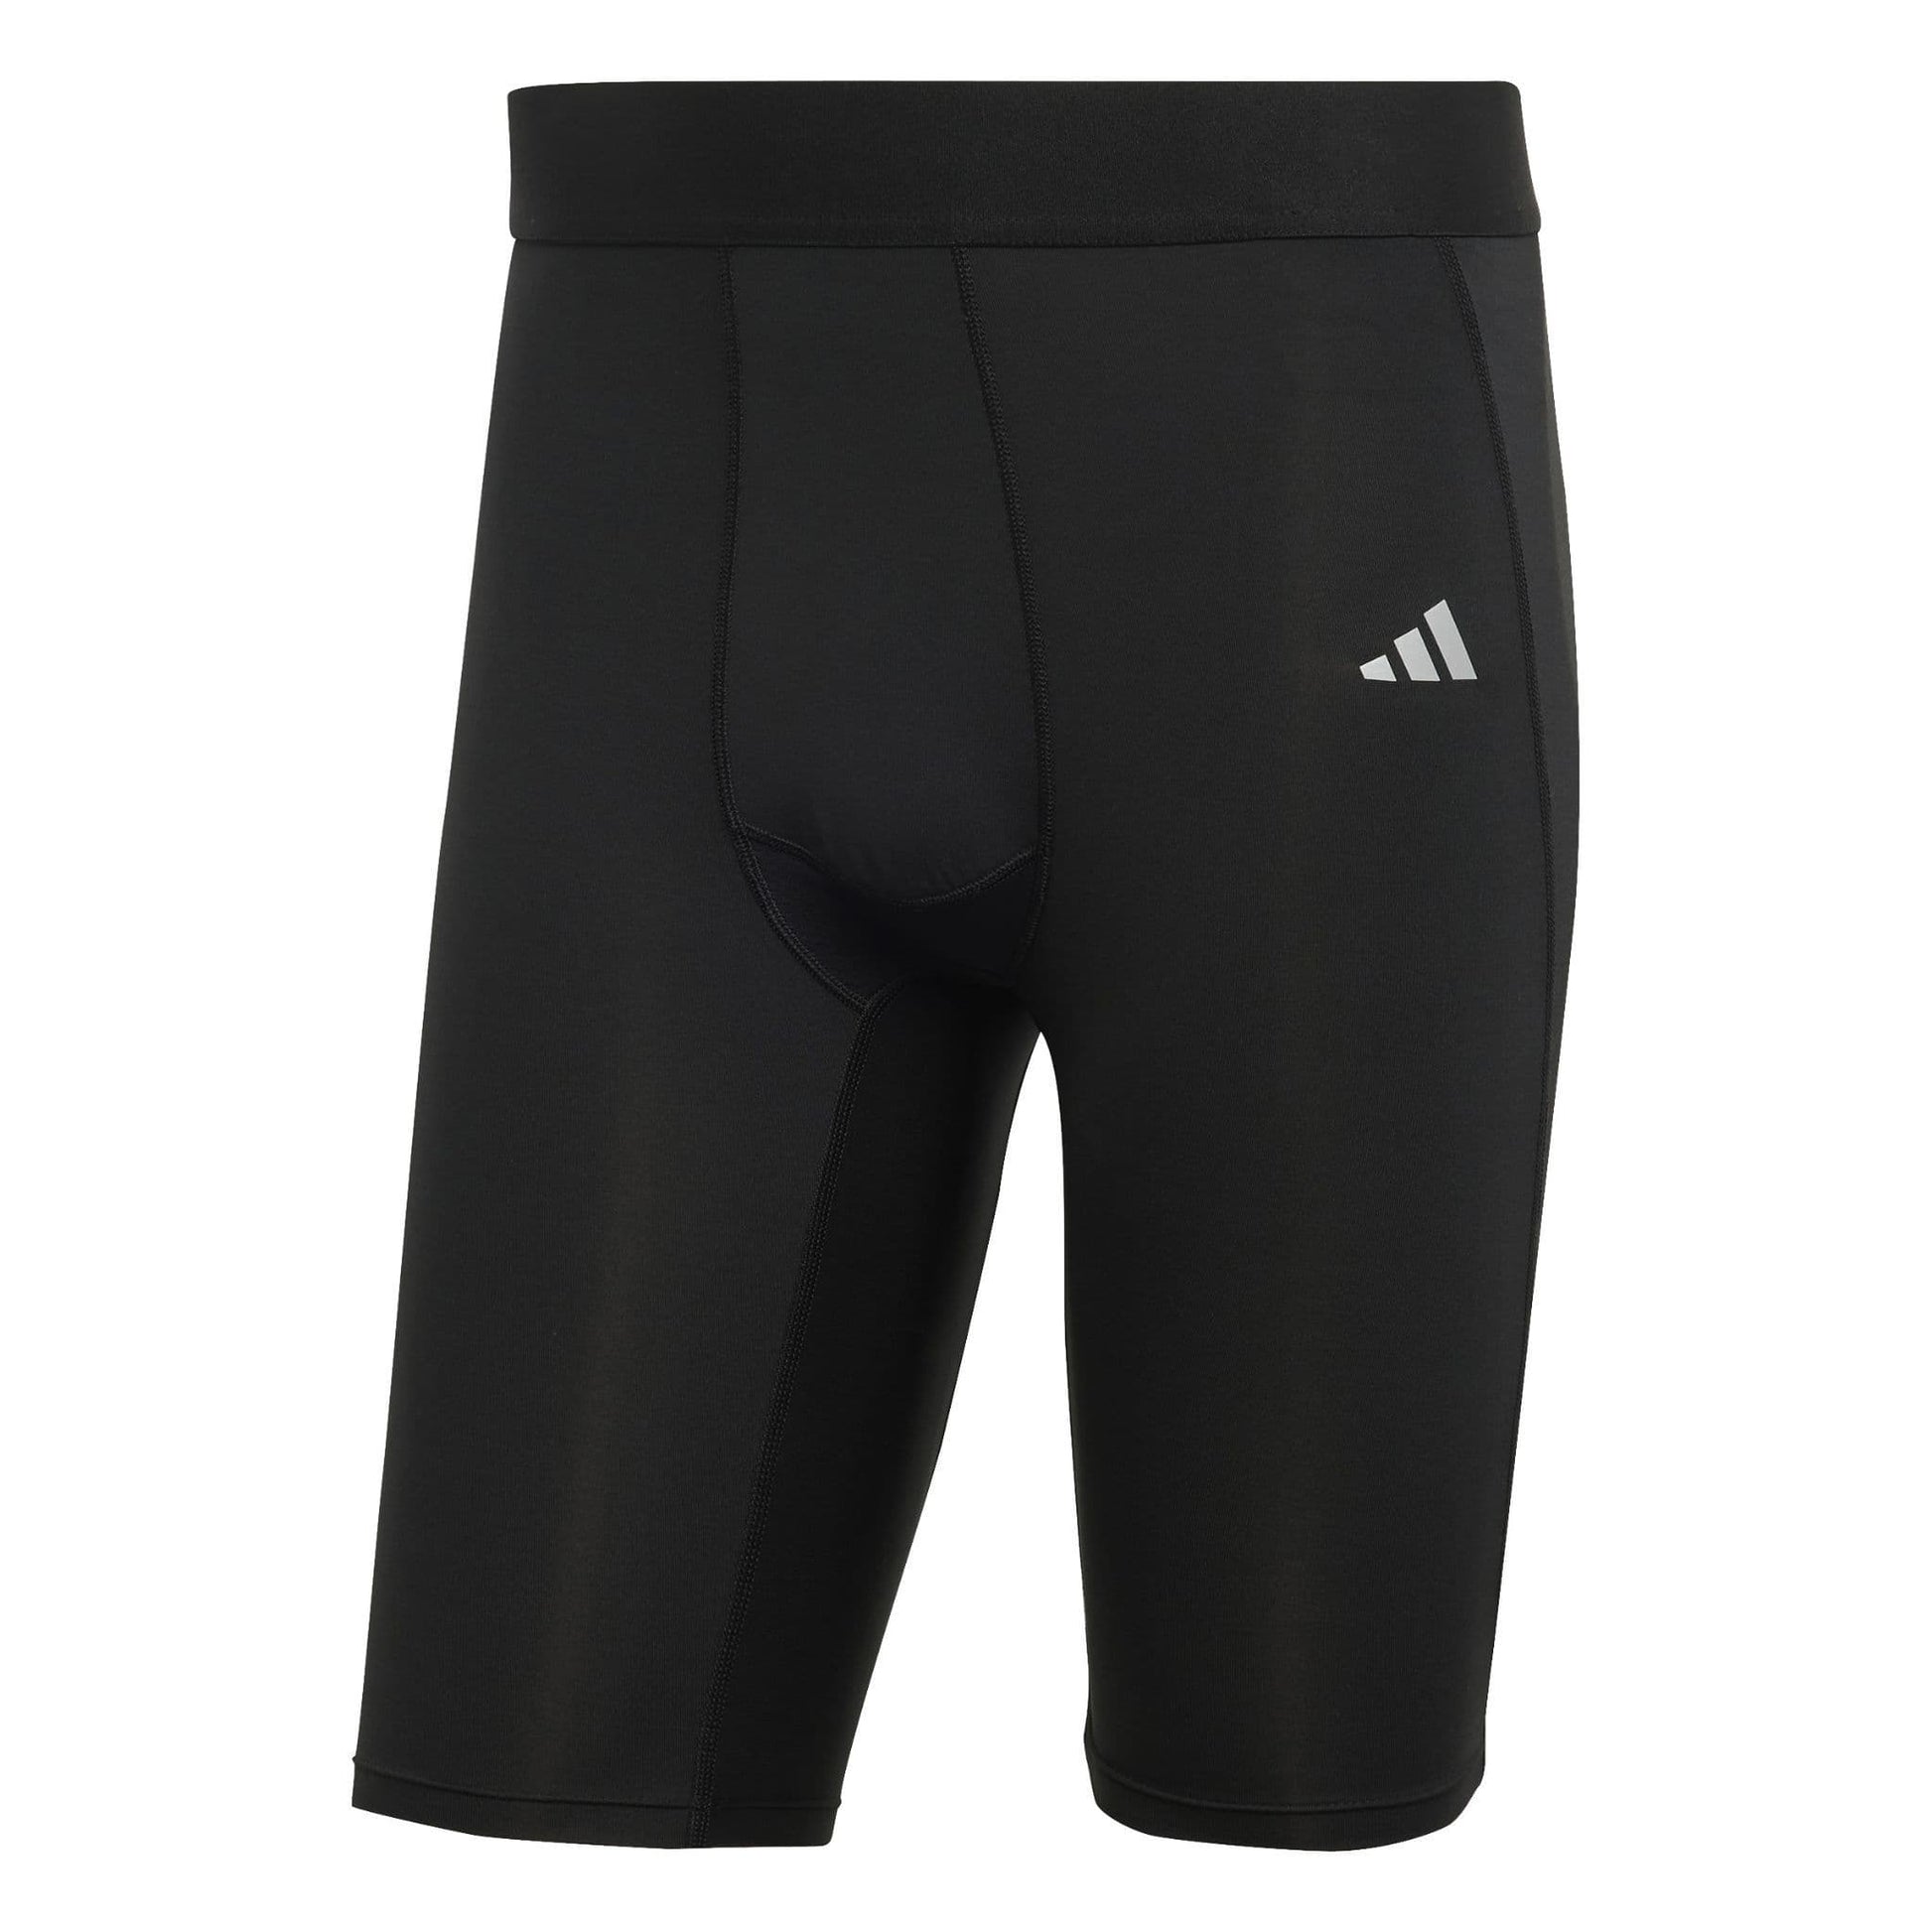 Adidas Tech-Fit Shorts